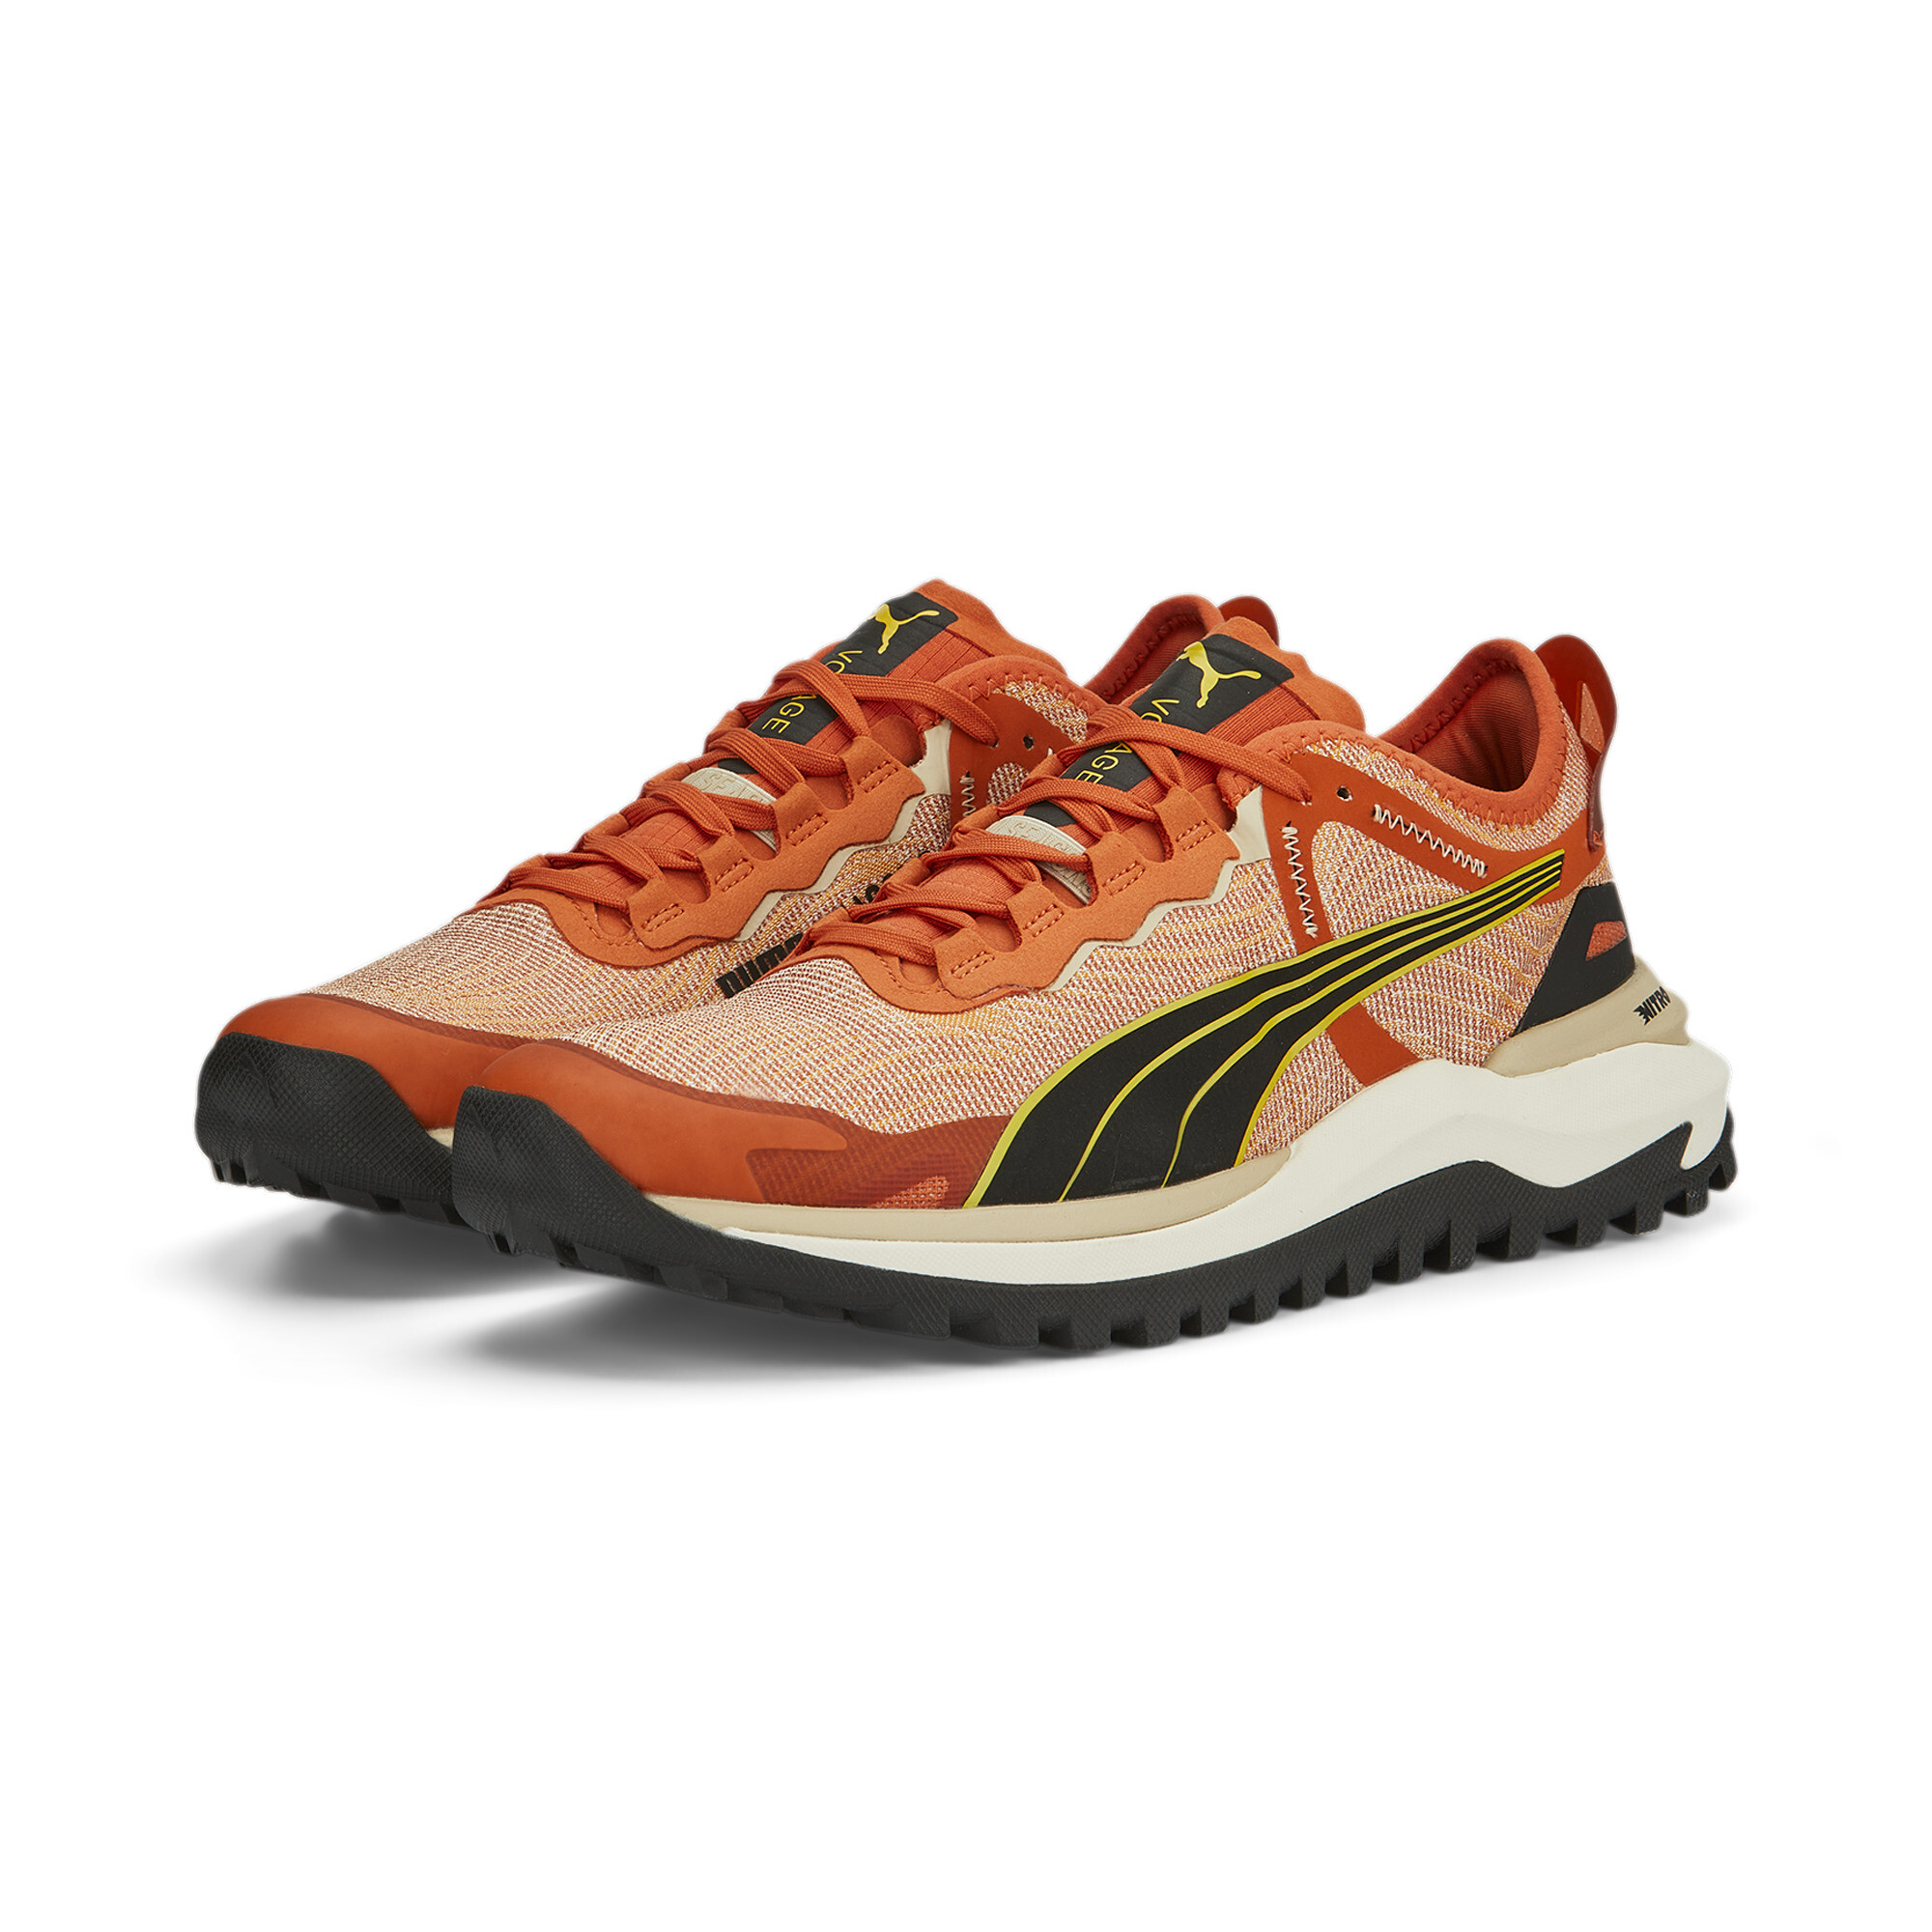 Men's PUMA Voyage NITRO 2 Trail Running Shoes In 110 - Orange, Size EU 40.5